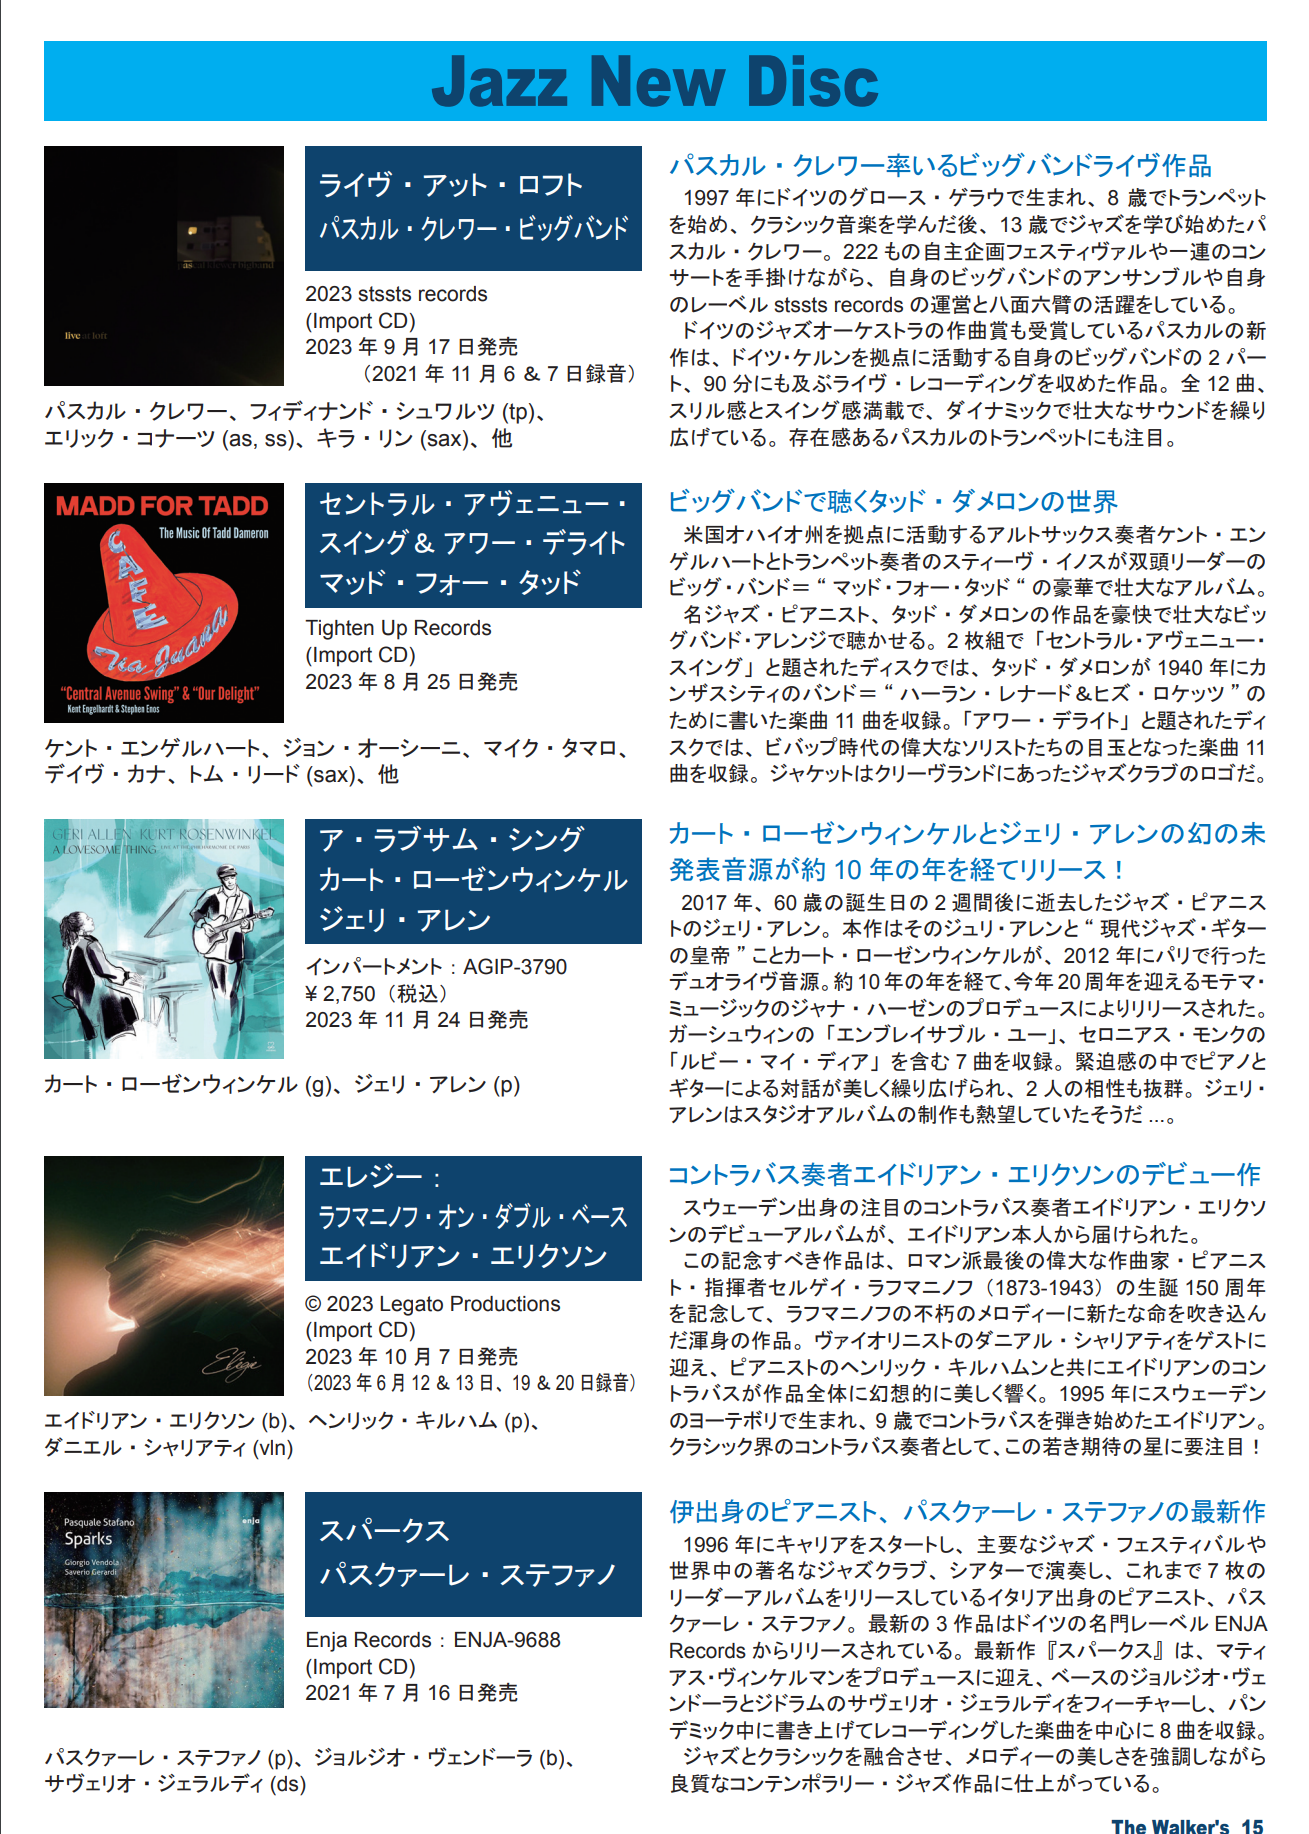 Sparks - Enja Records in teh Japanese music Magazine - The Walker's